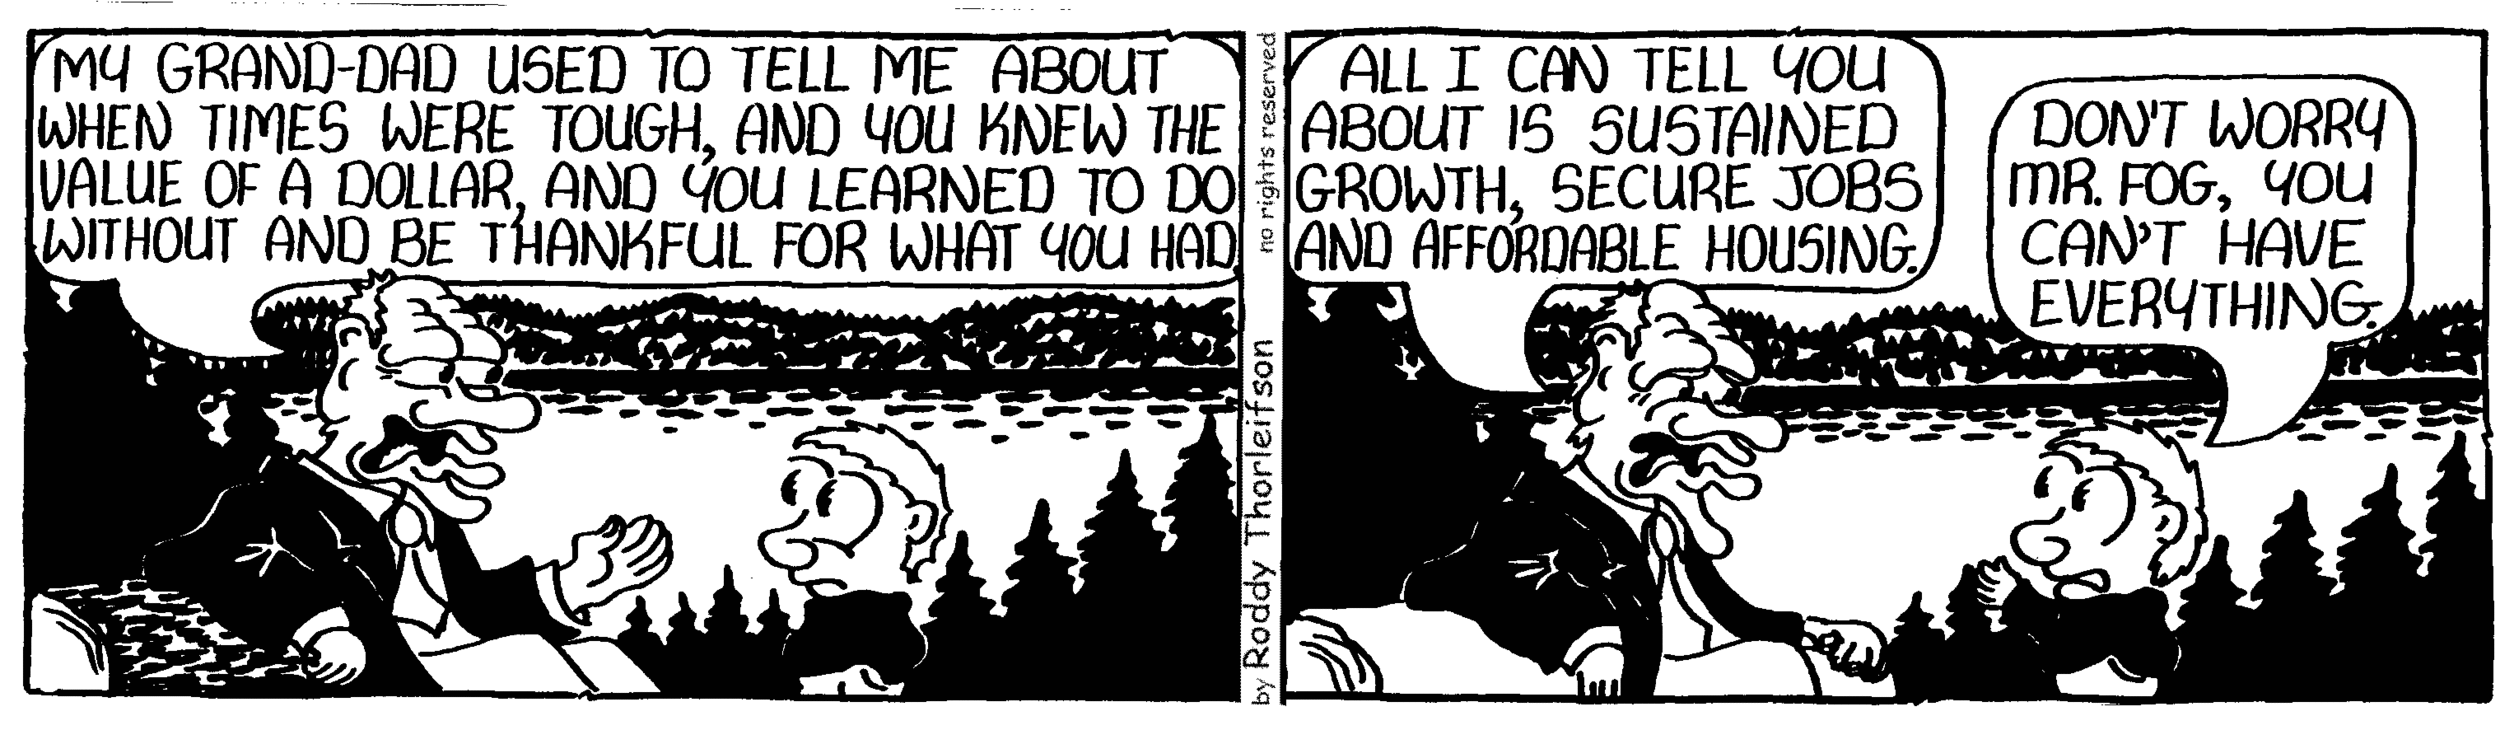 free cartoon economy economic economist prosperity and grand-dad used to tell me